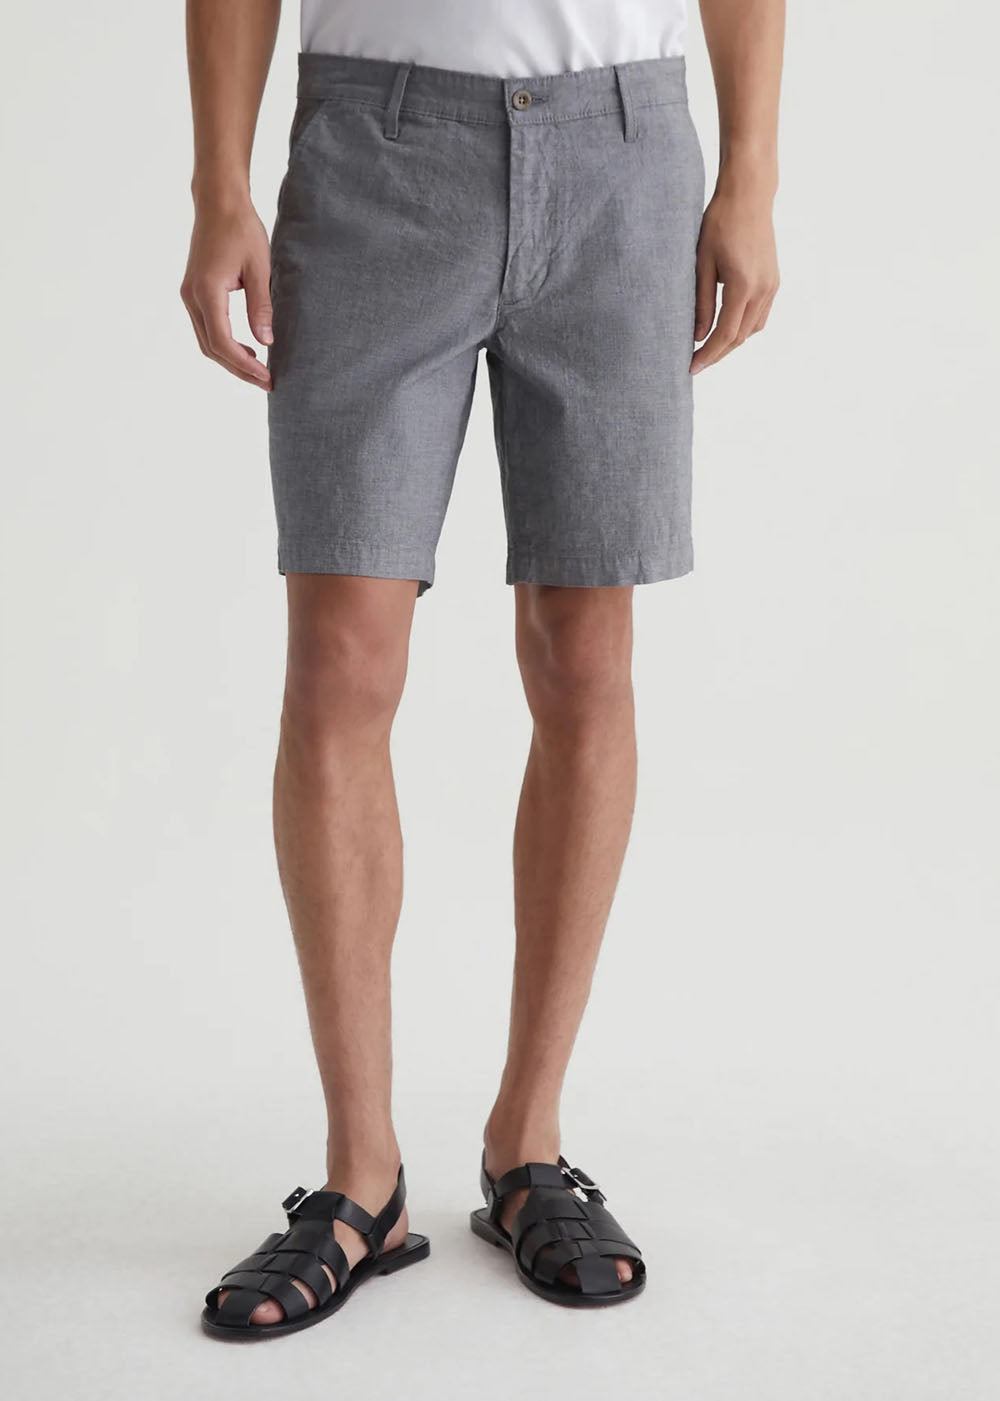 Wanderer Shorts - Moreton Bay - AG Jeans Canada - Danali - 1197PYCMORB